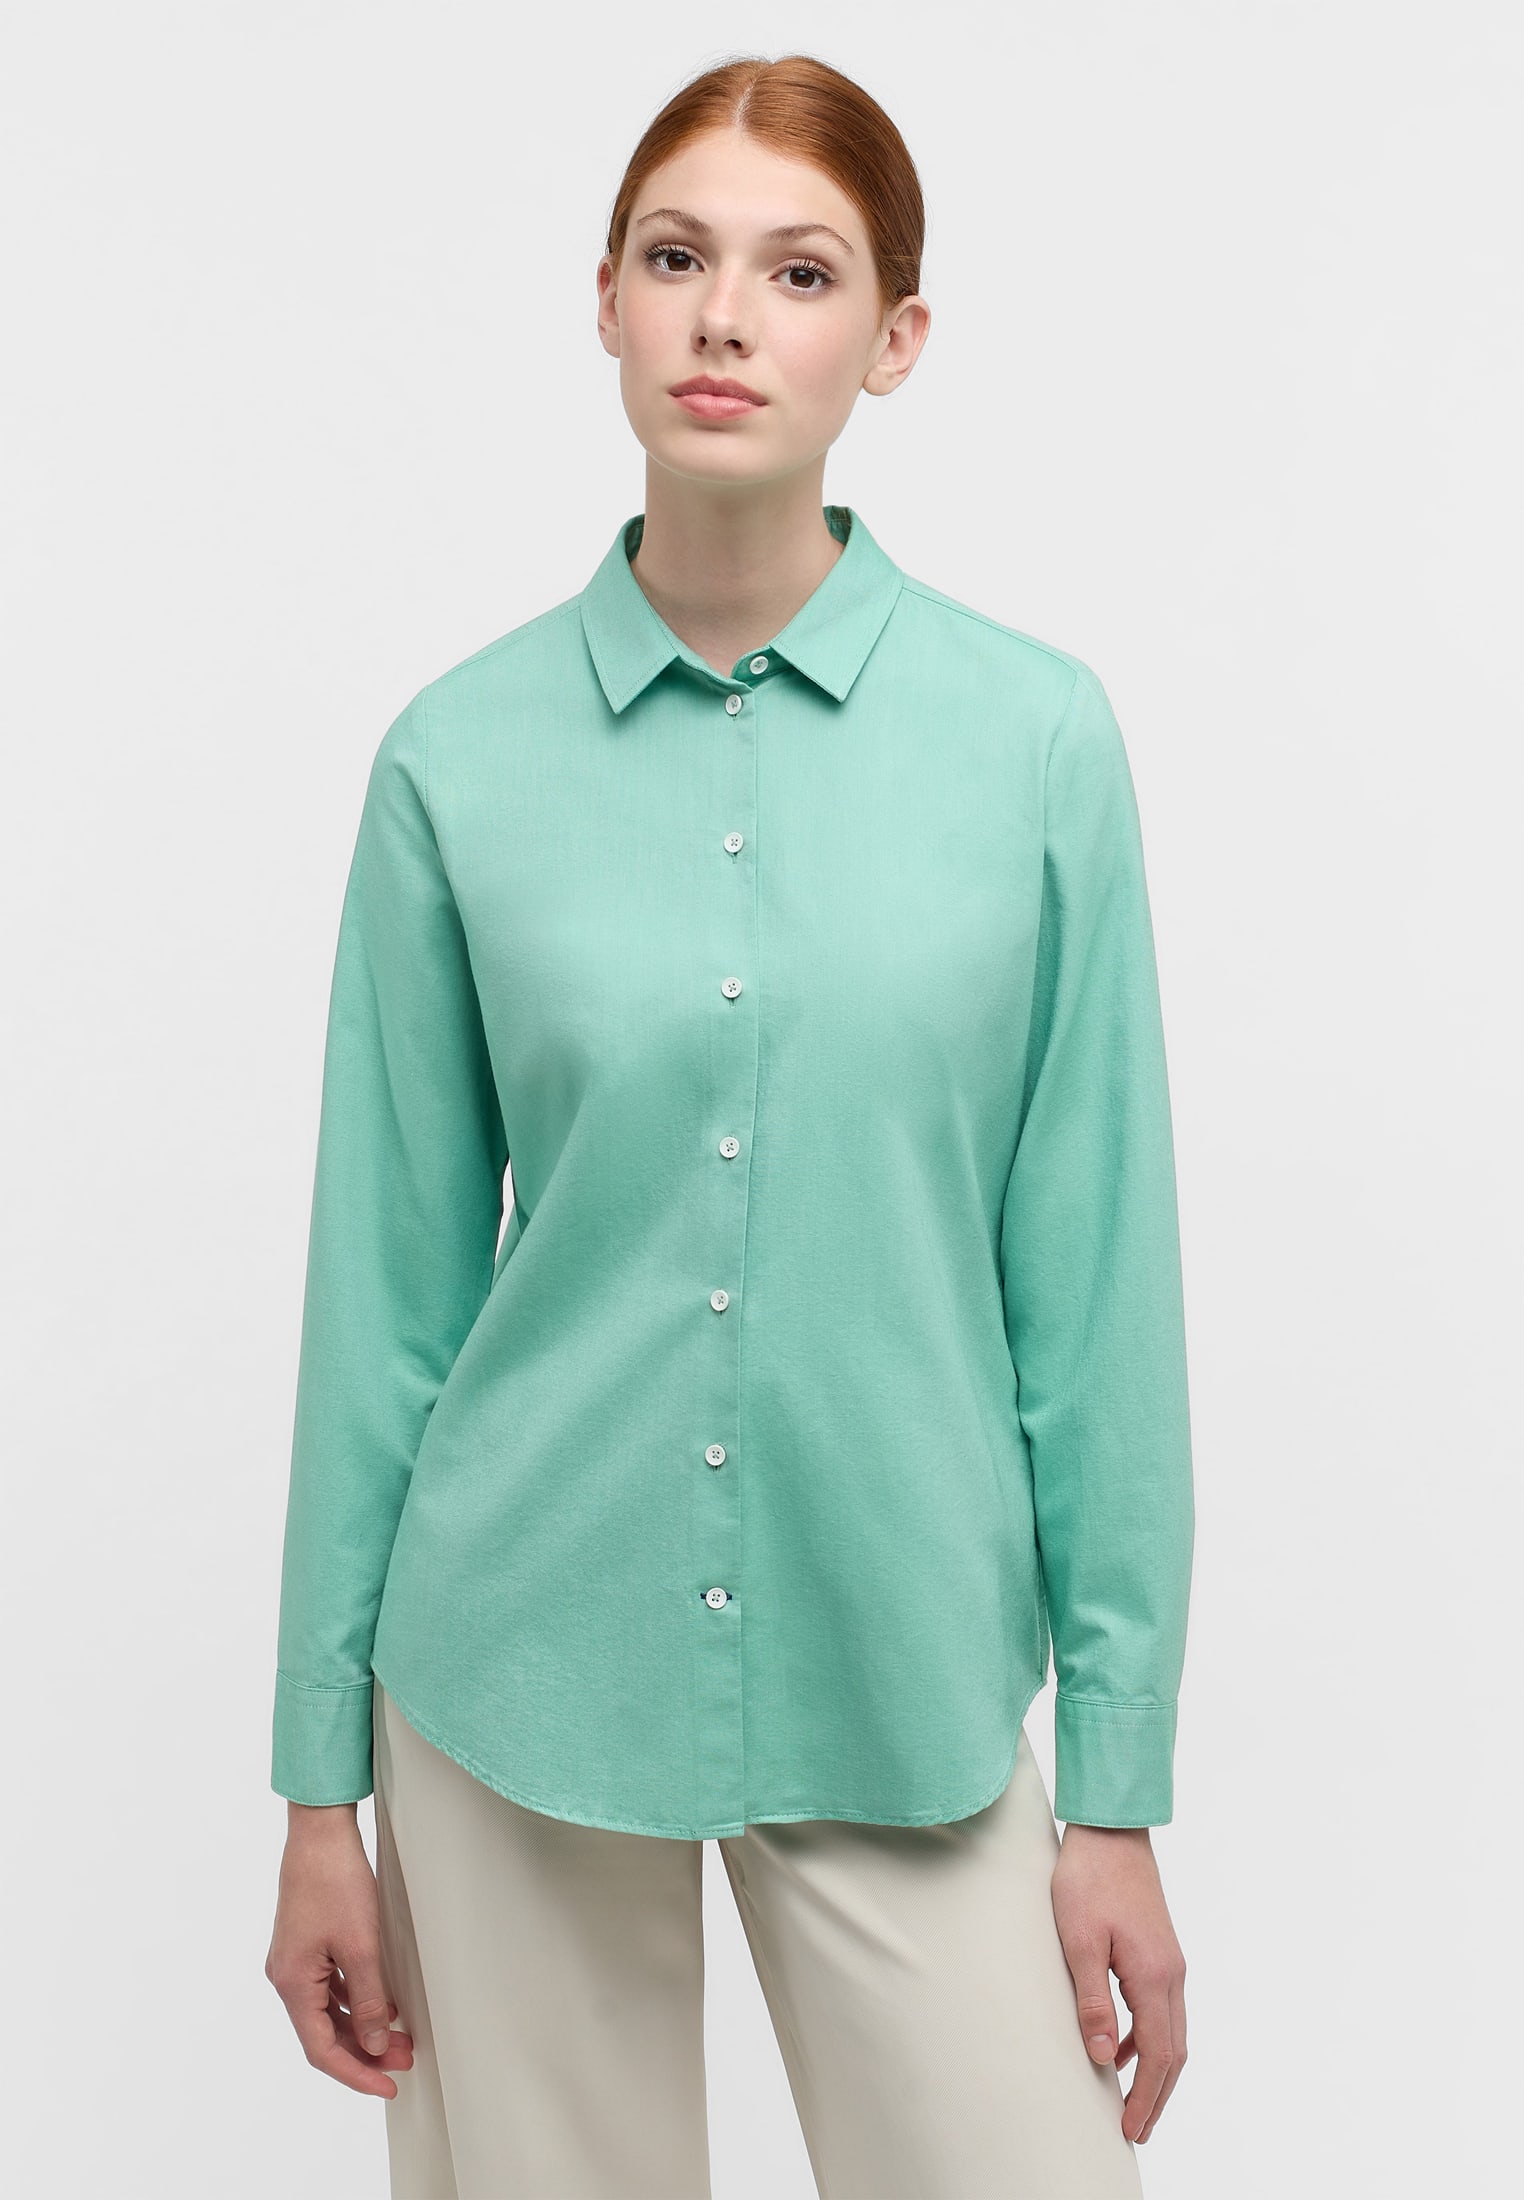 Oxford Shirt | | hellgrün | Bluse hellgrün 2BL04173-04-02-50-1/1 Langarm | in unifarben 50